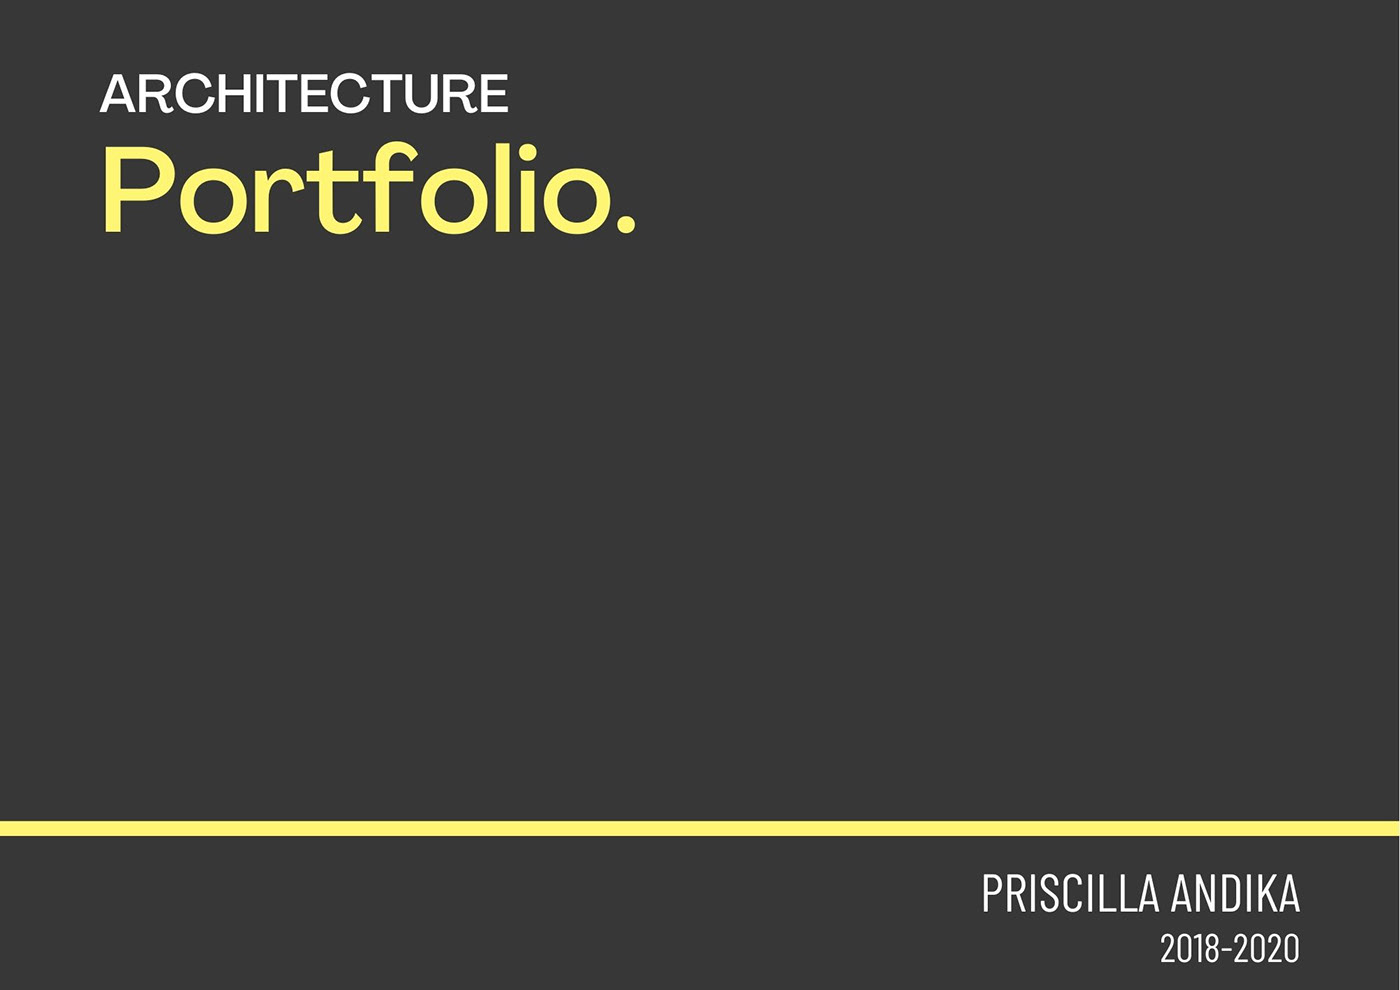 architect architecture Architecture portfolio portfolio